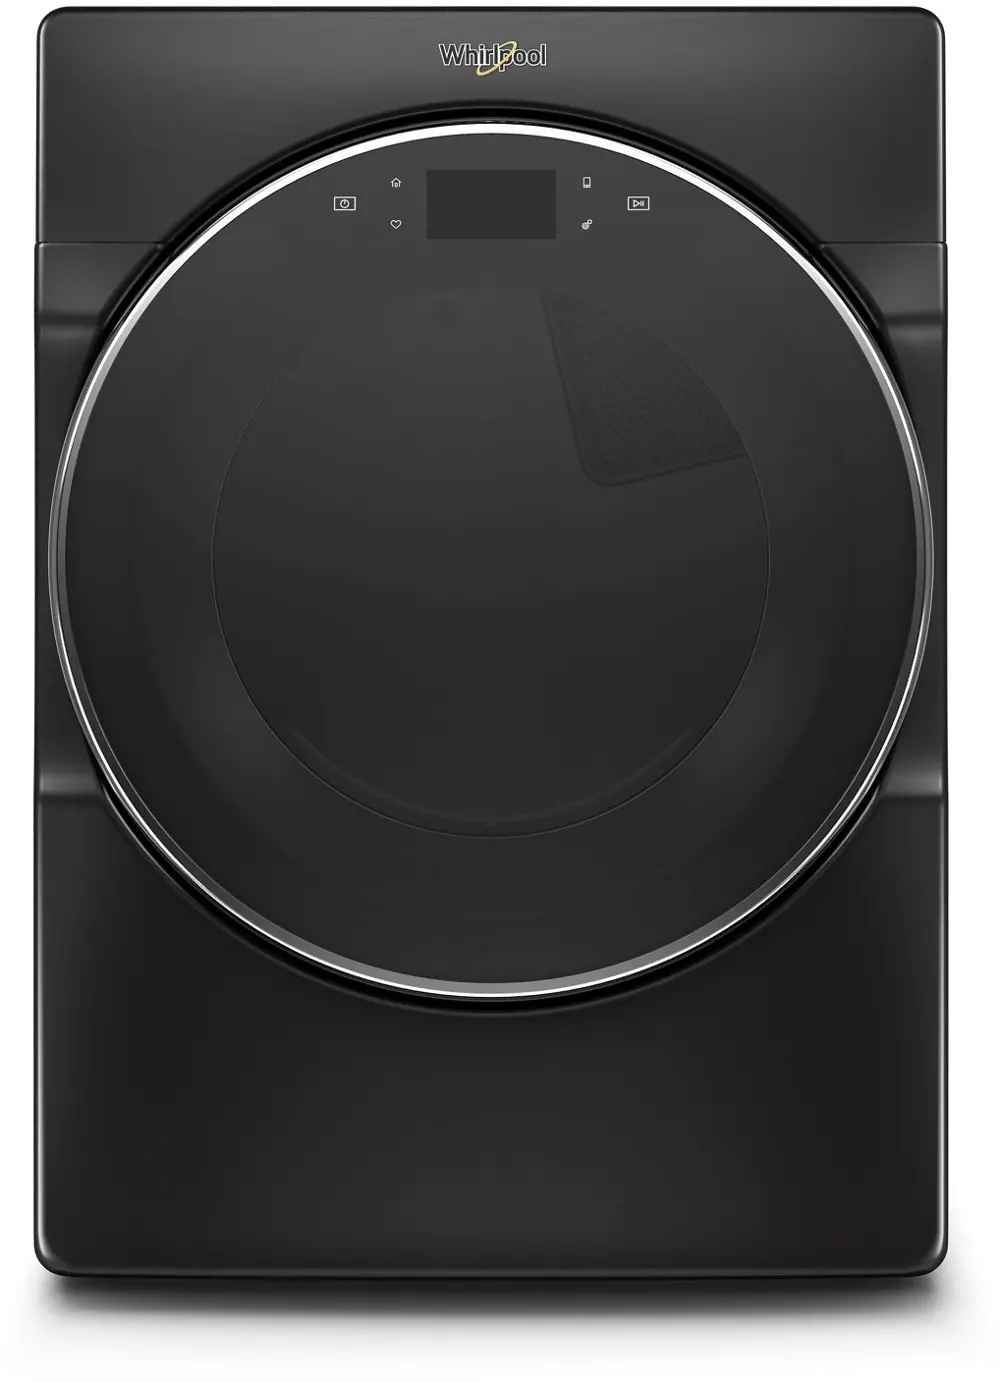 WGD9620HBK Whirlpool 7.4 cu. ft. Smart Gas Dryer - Black-1